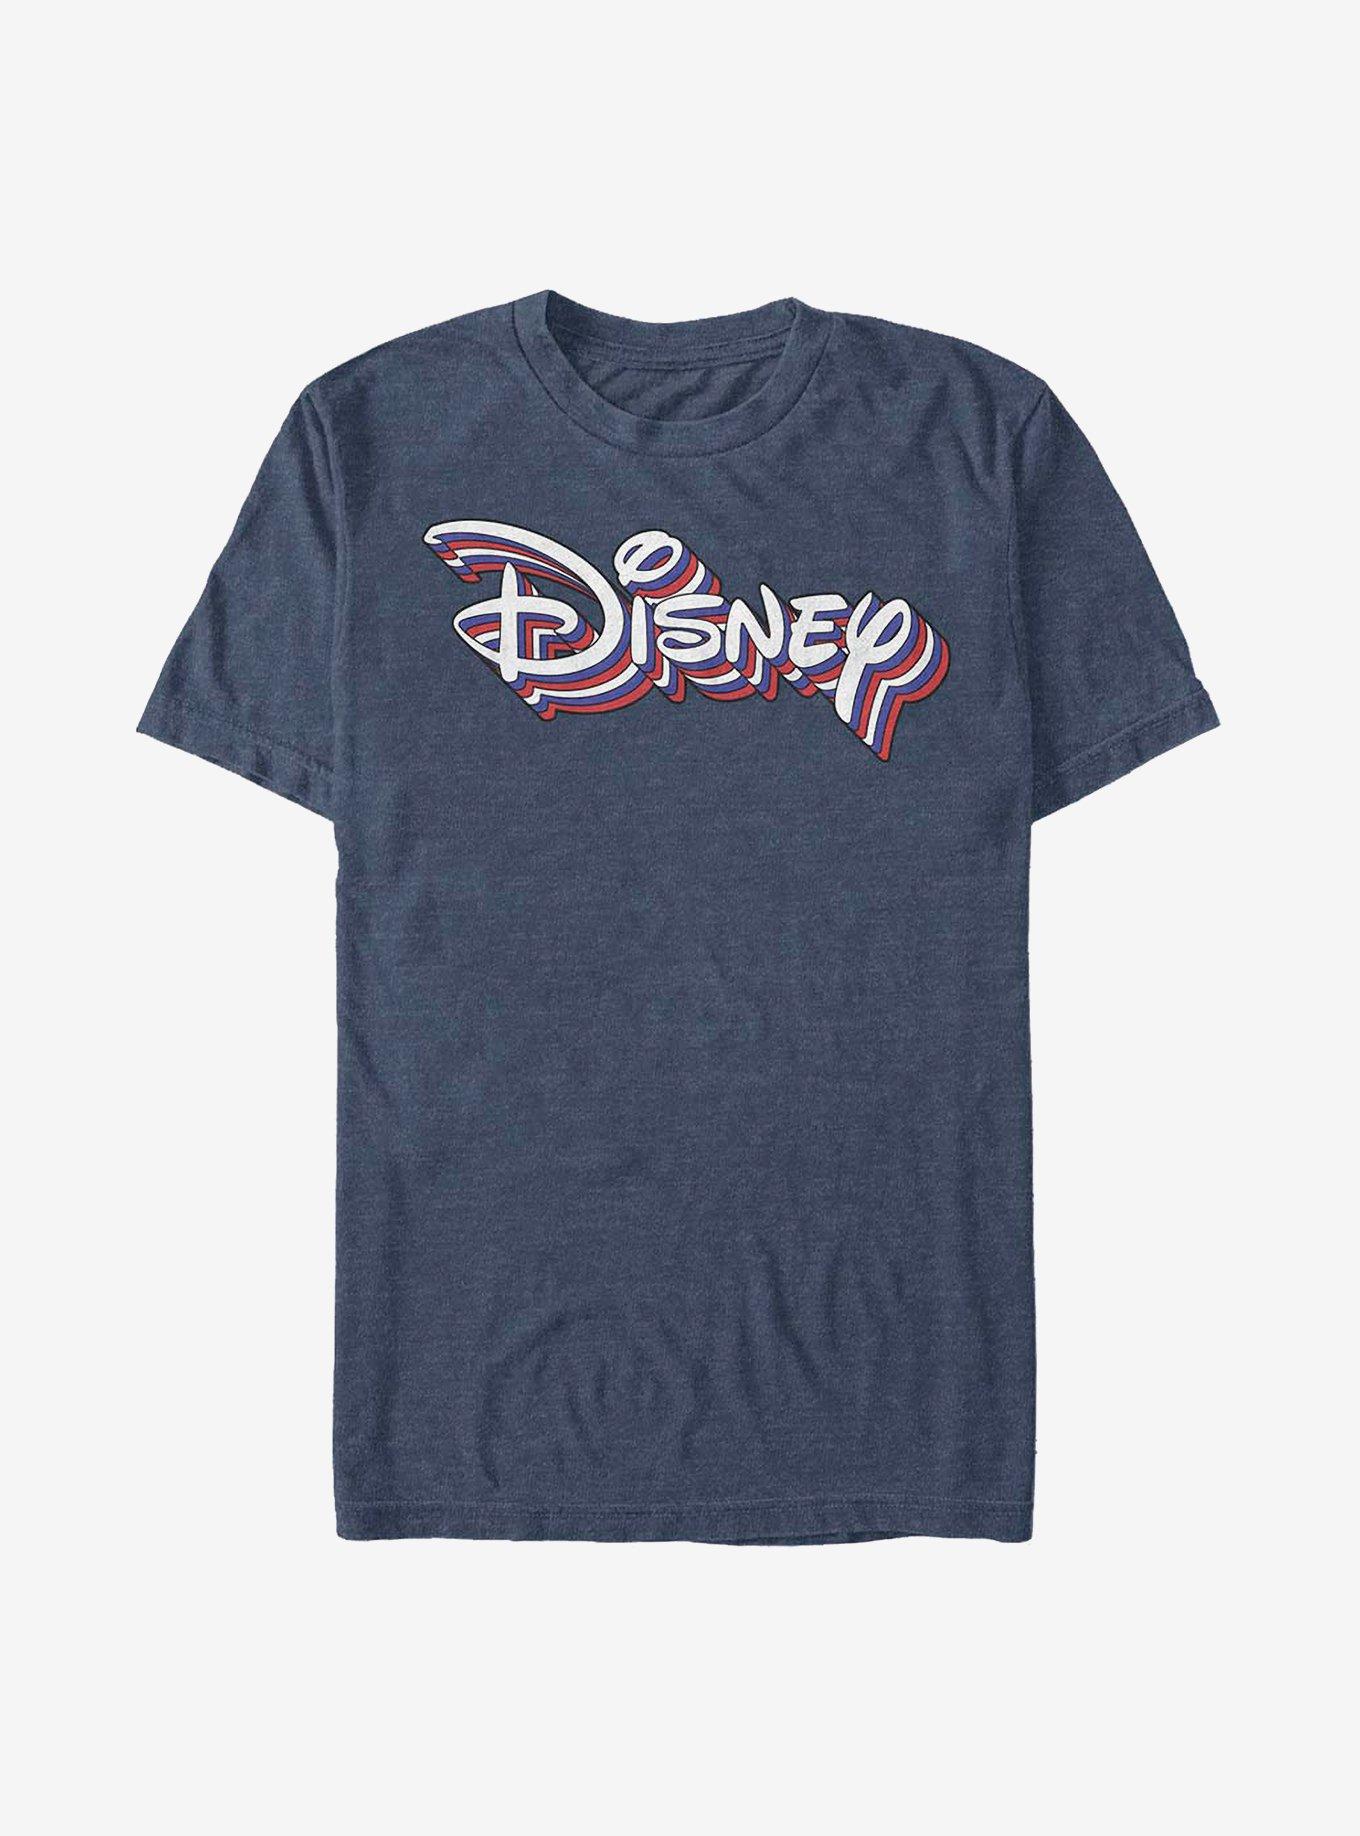 Disney Channel Retro Rainbow T-Shirt, NAVY HTR, hi-res